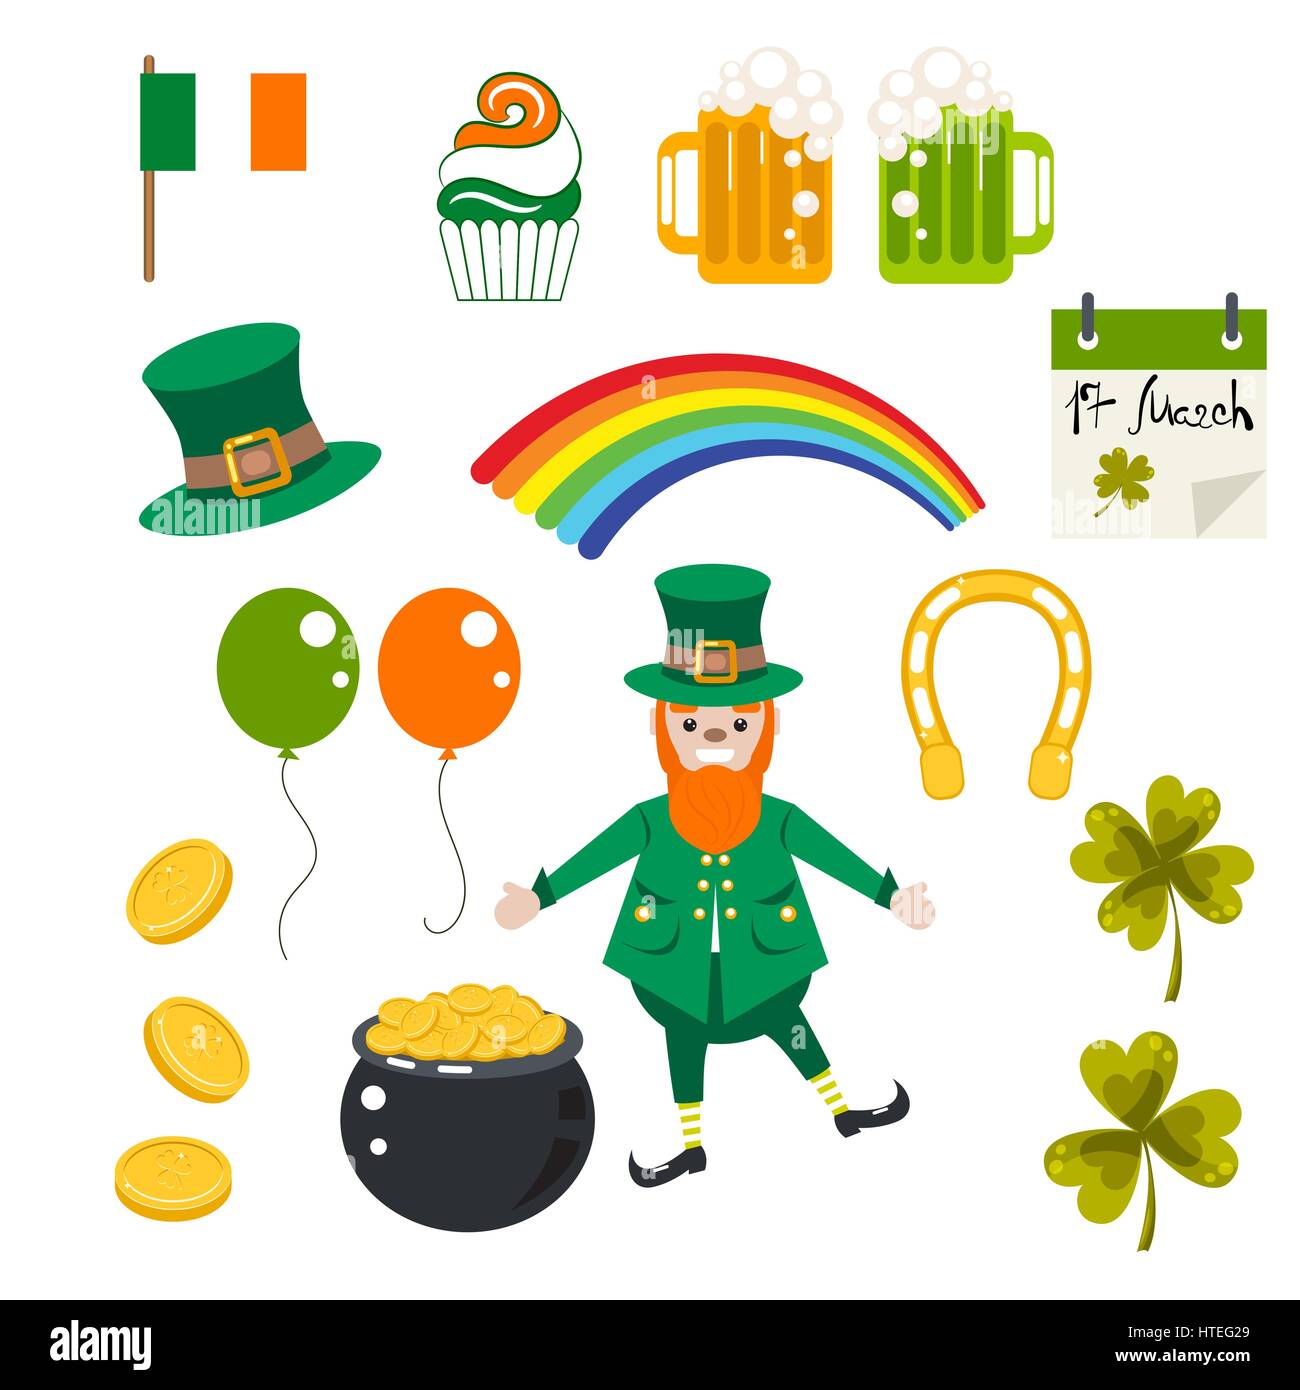 St. Patrick holiday vector illustration set. Stock Vector